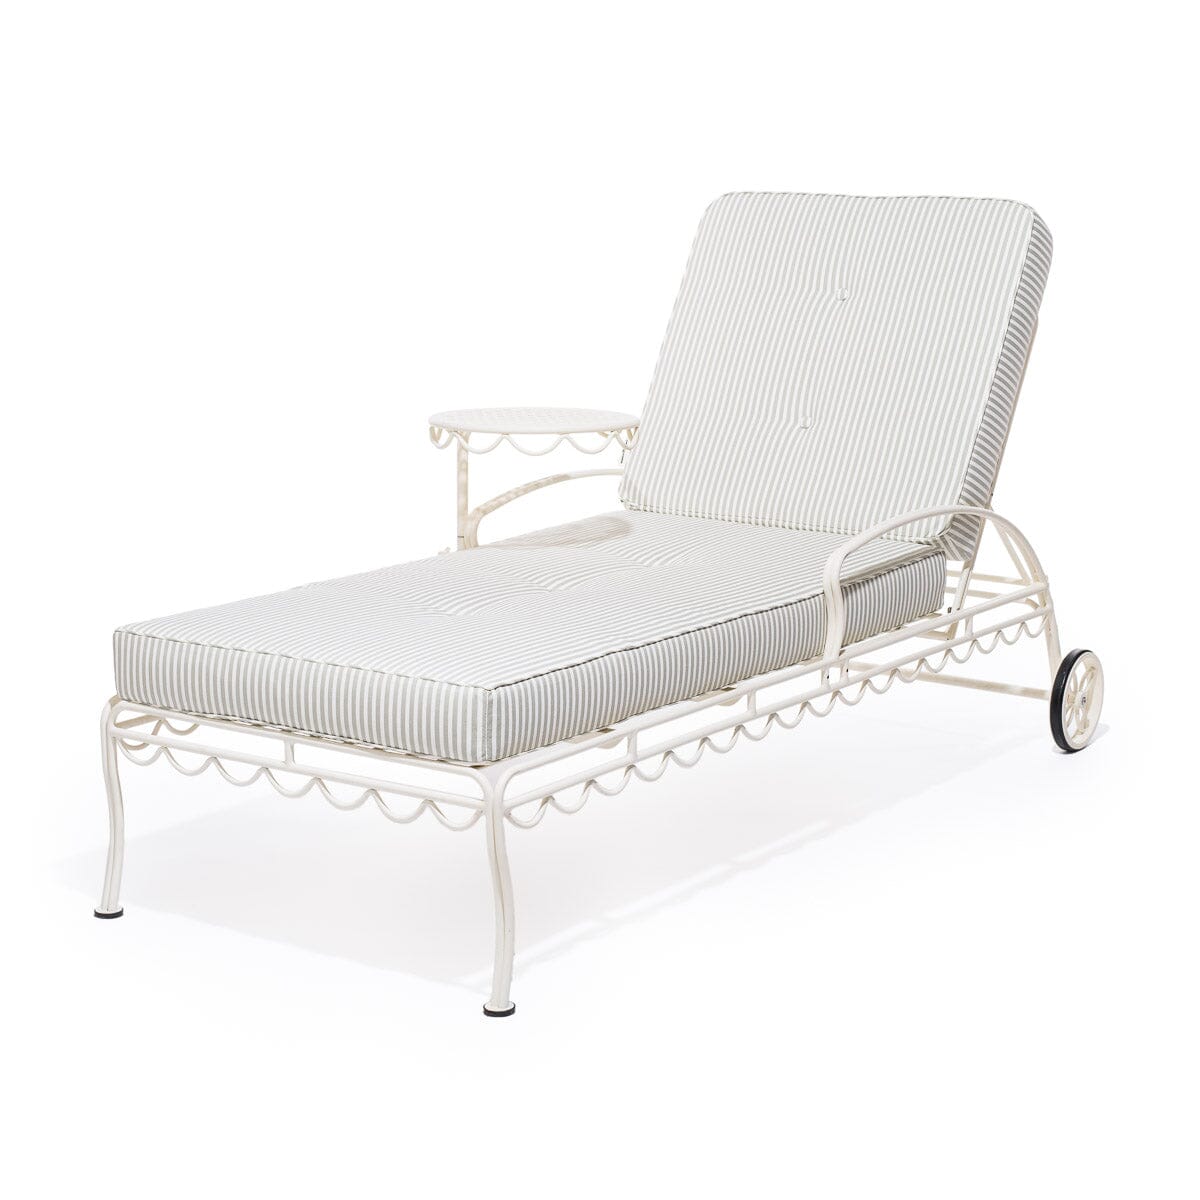 The Al Fresco Sun Lounger Cushion - Lauren's Sage Stripe Al Fresco Sun Lounger Cushion Business & Pleasure Co Aus 